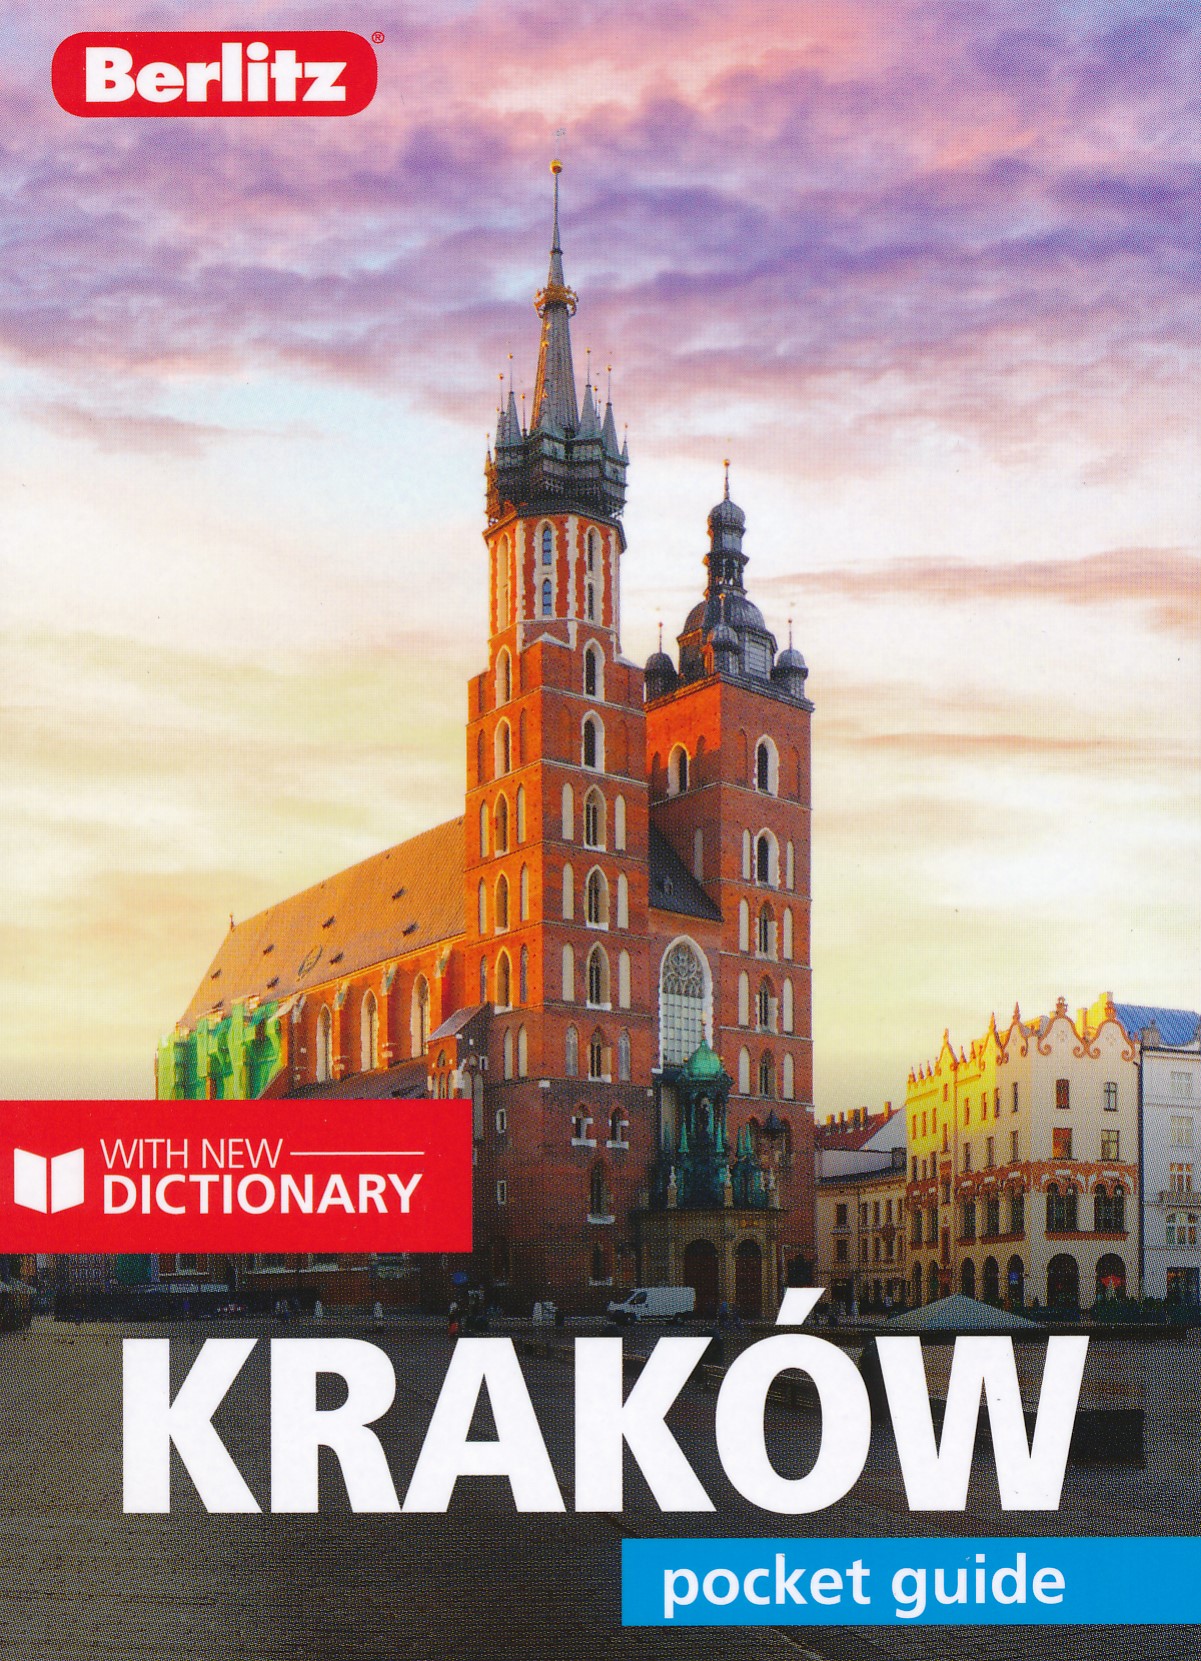 Online bestellen: Reisgids Pocket Guide Krakow - Krakau | Berlitz